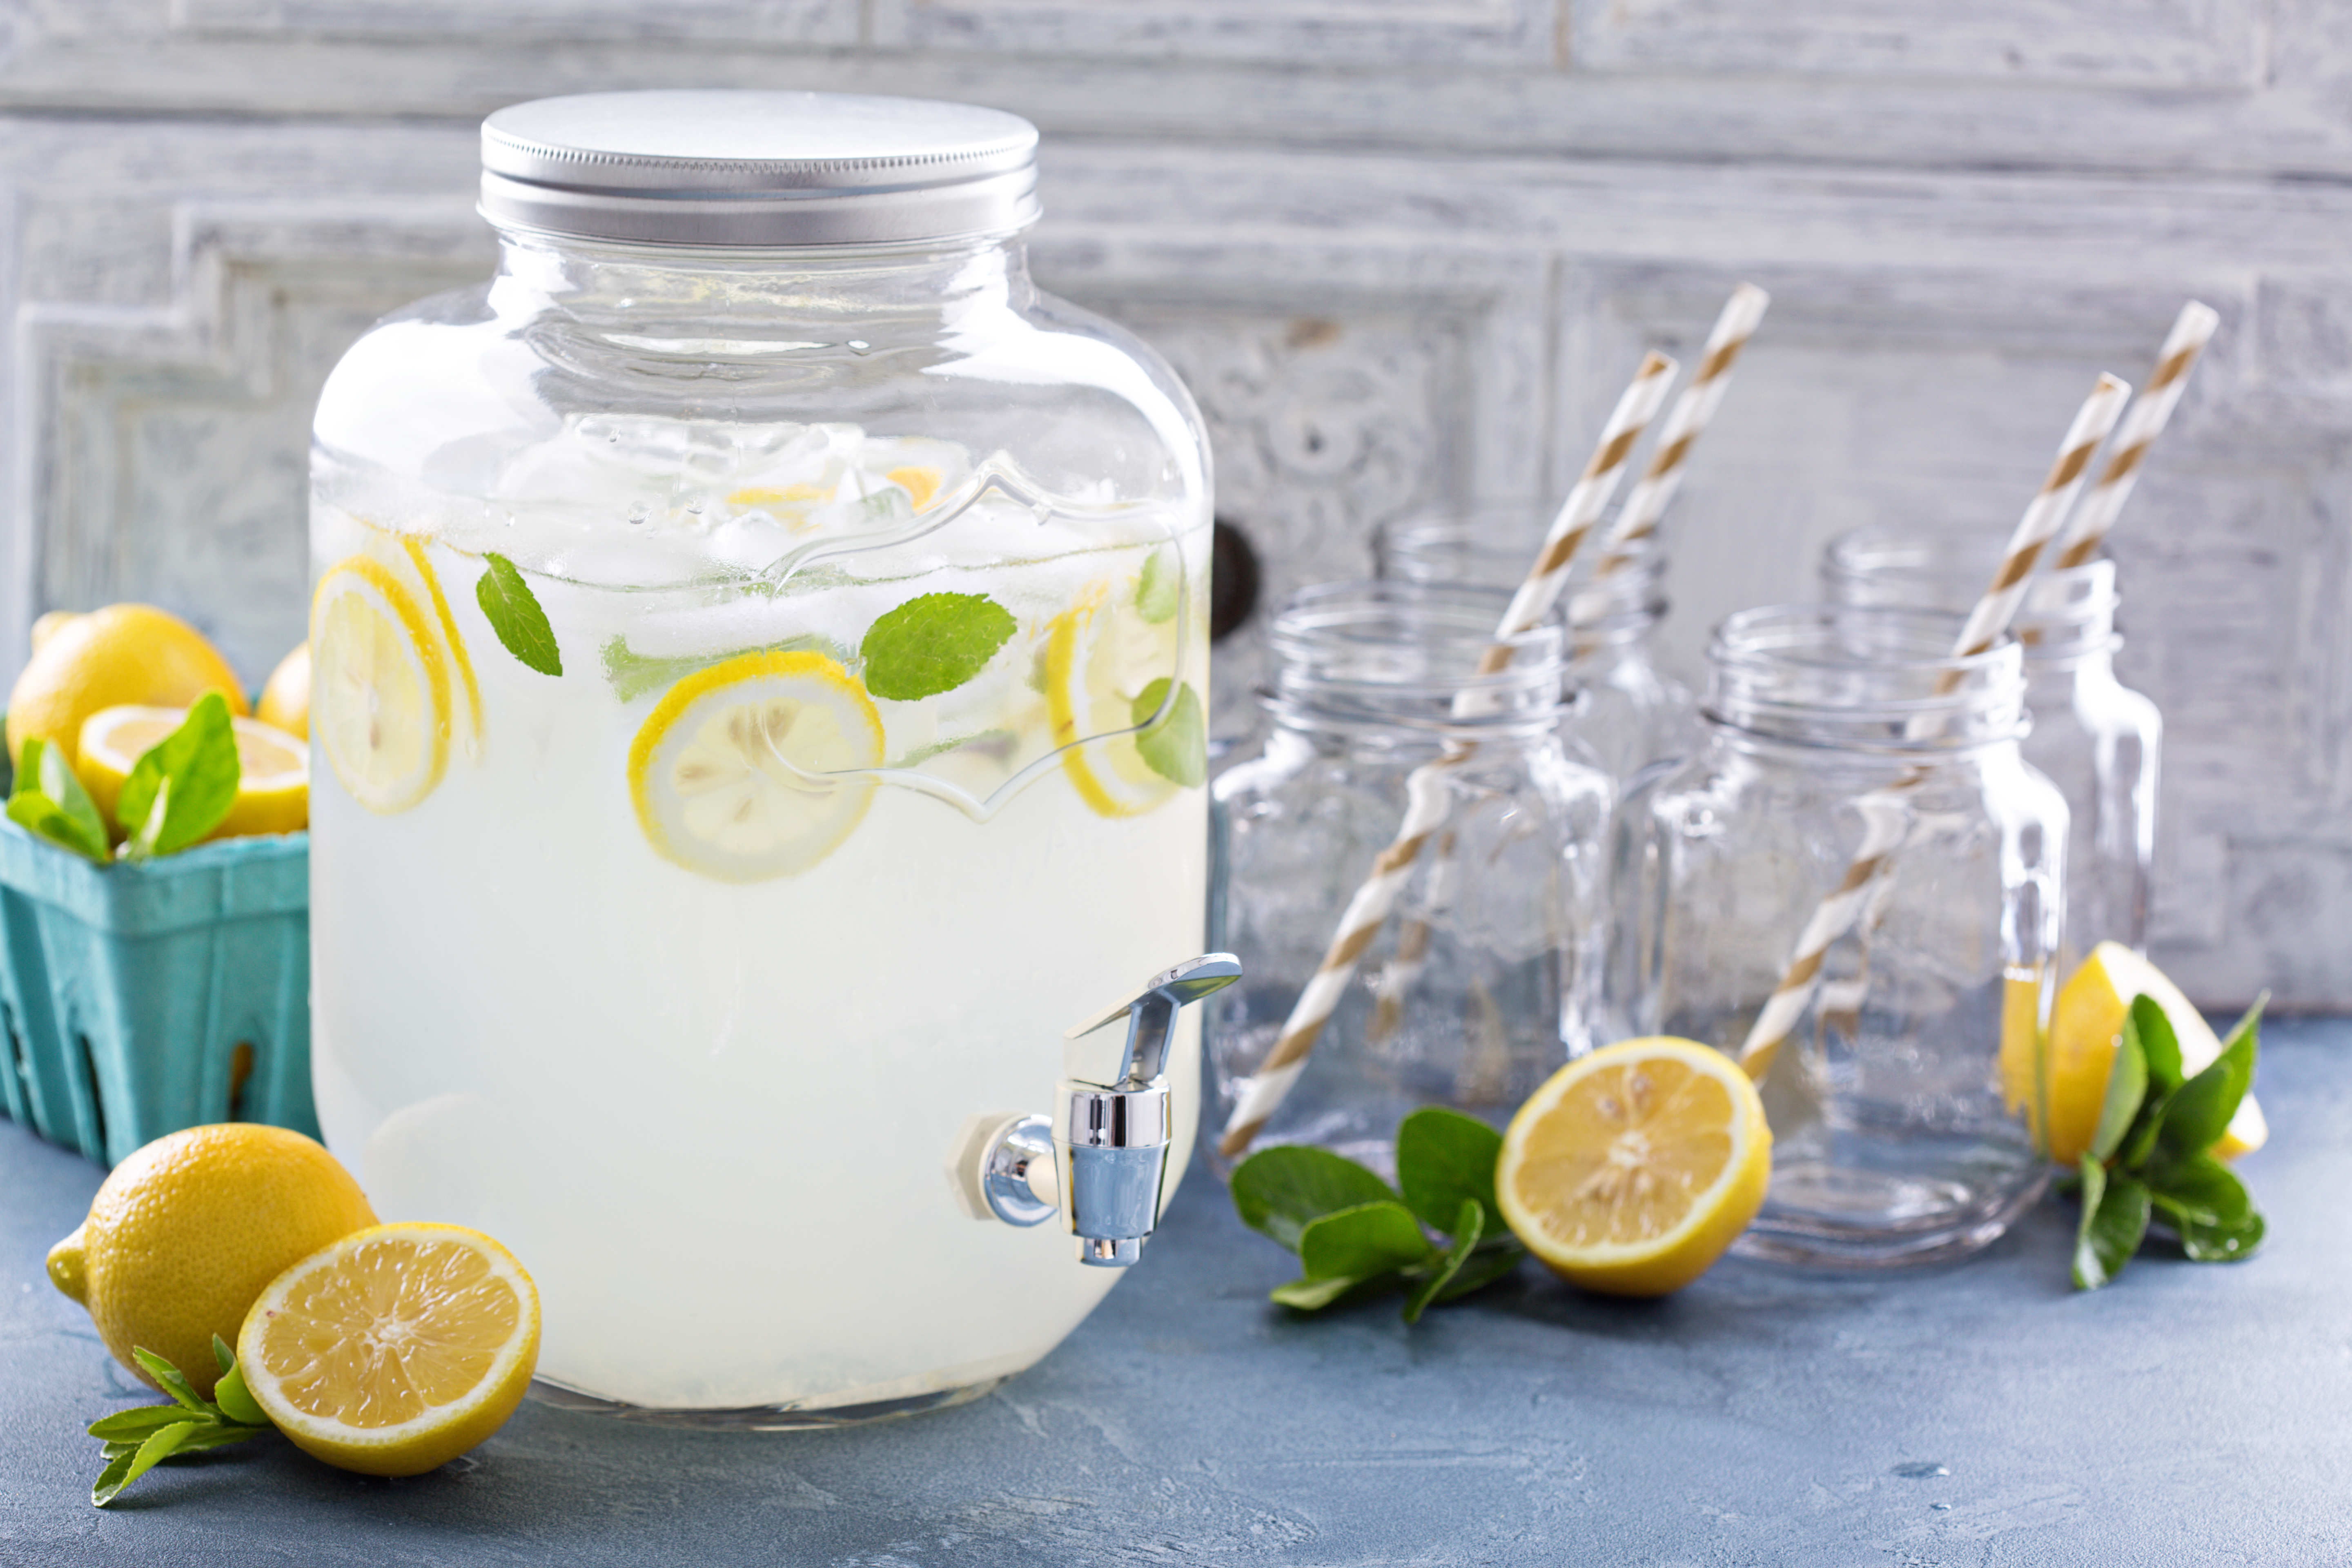 A big glass drink dispenser filled with lemonade and sliced lemons, surrounded by drinking glasses and sliced lemons.